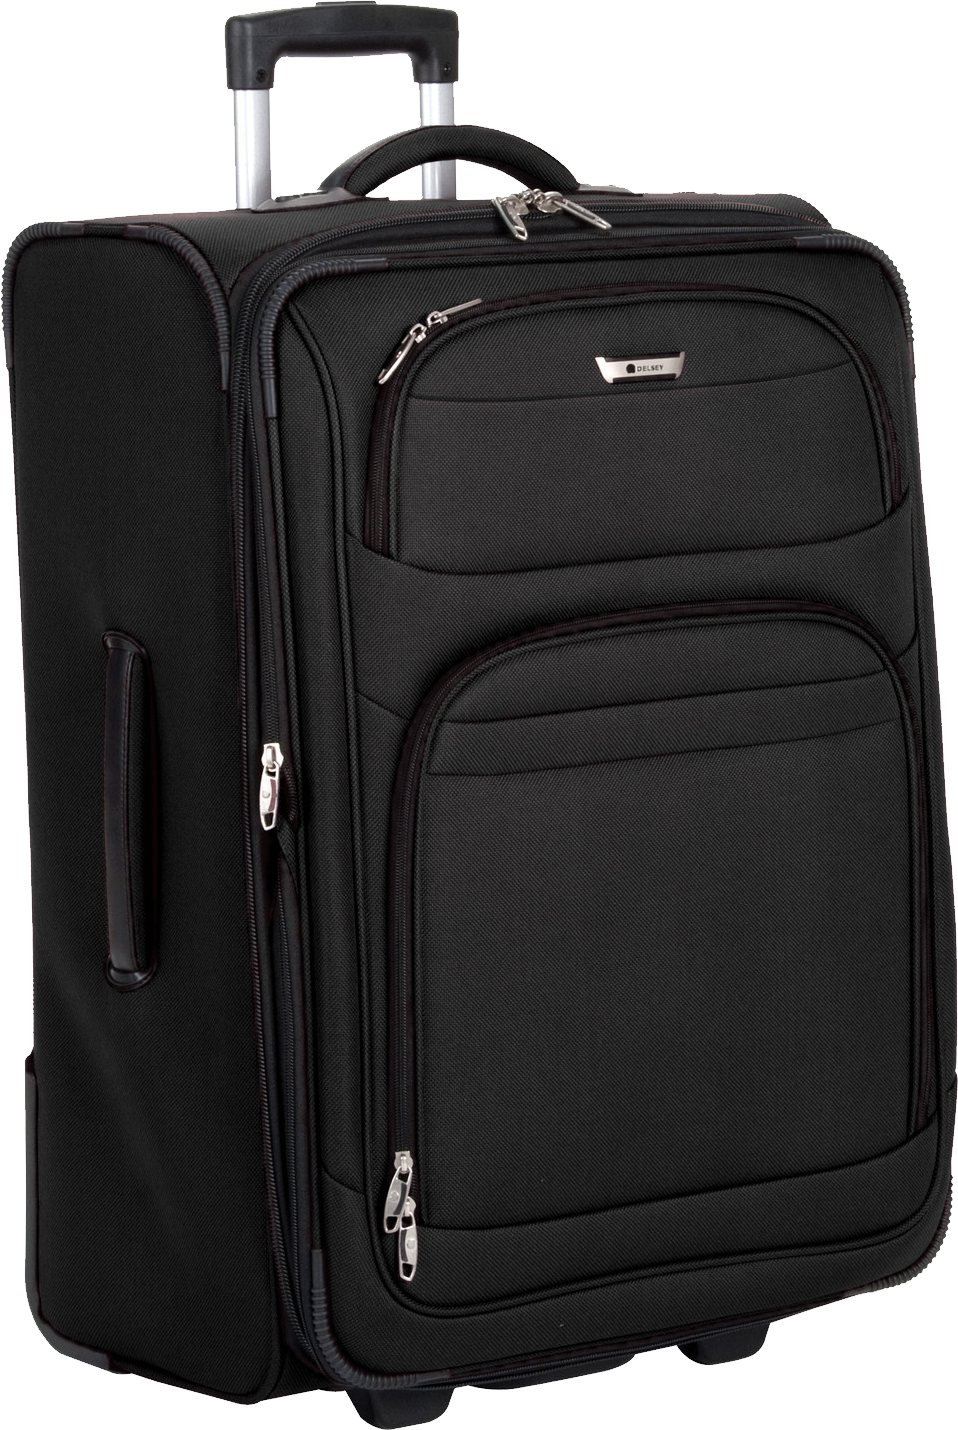 Black luggage PNG image